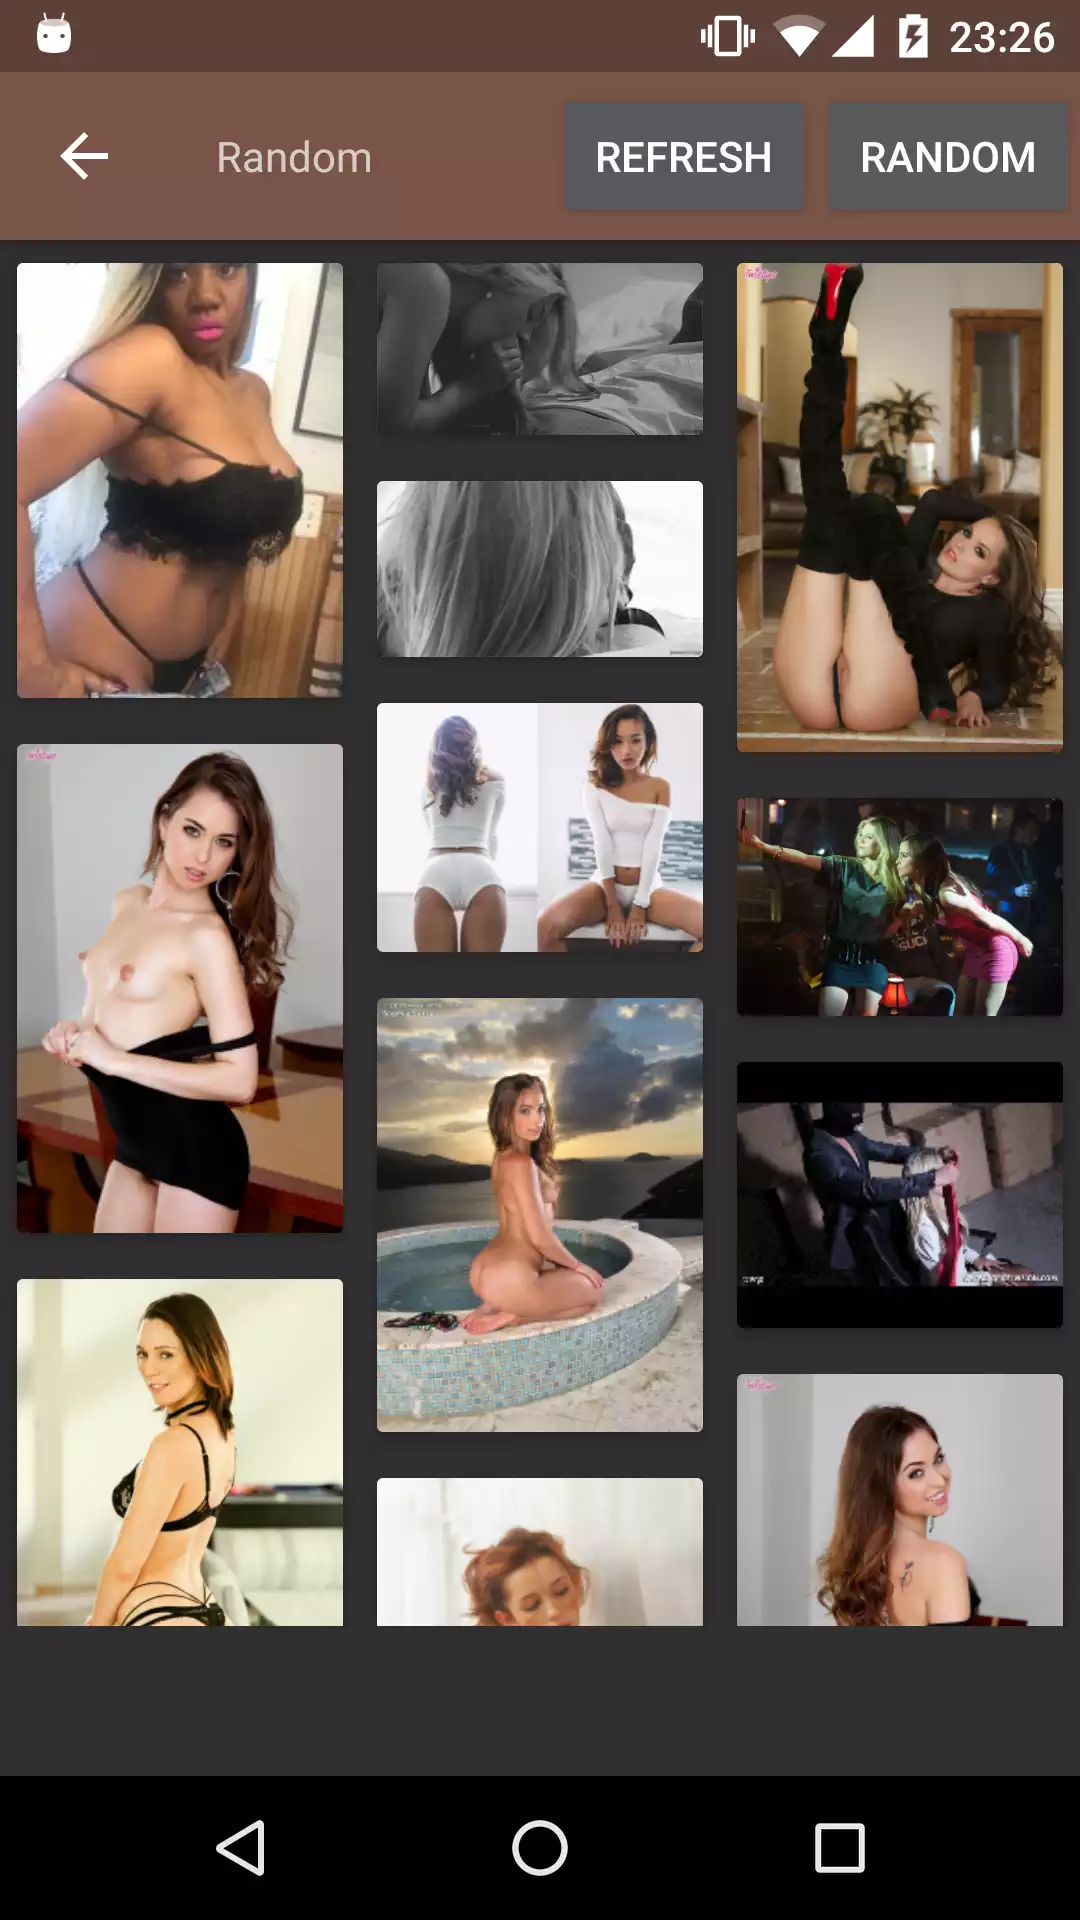 Hot pornstar pics gallery,pics,photos,hentai,images,tuesday,sexy,daily,pornstars,browser,galleries,futanari,pornstar,wallpapers,picture,titty,porn,app,pcs,punishment,time,good,hot,erotic